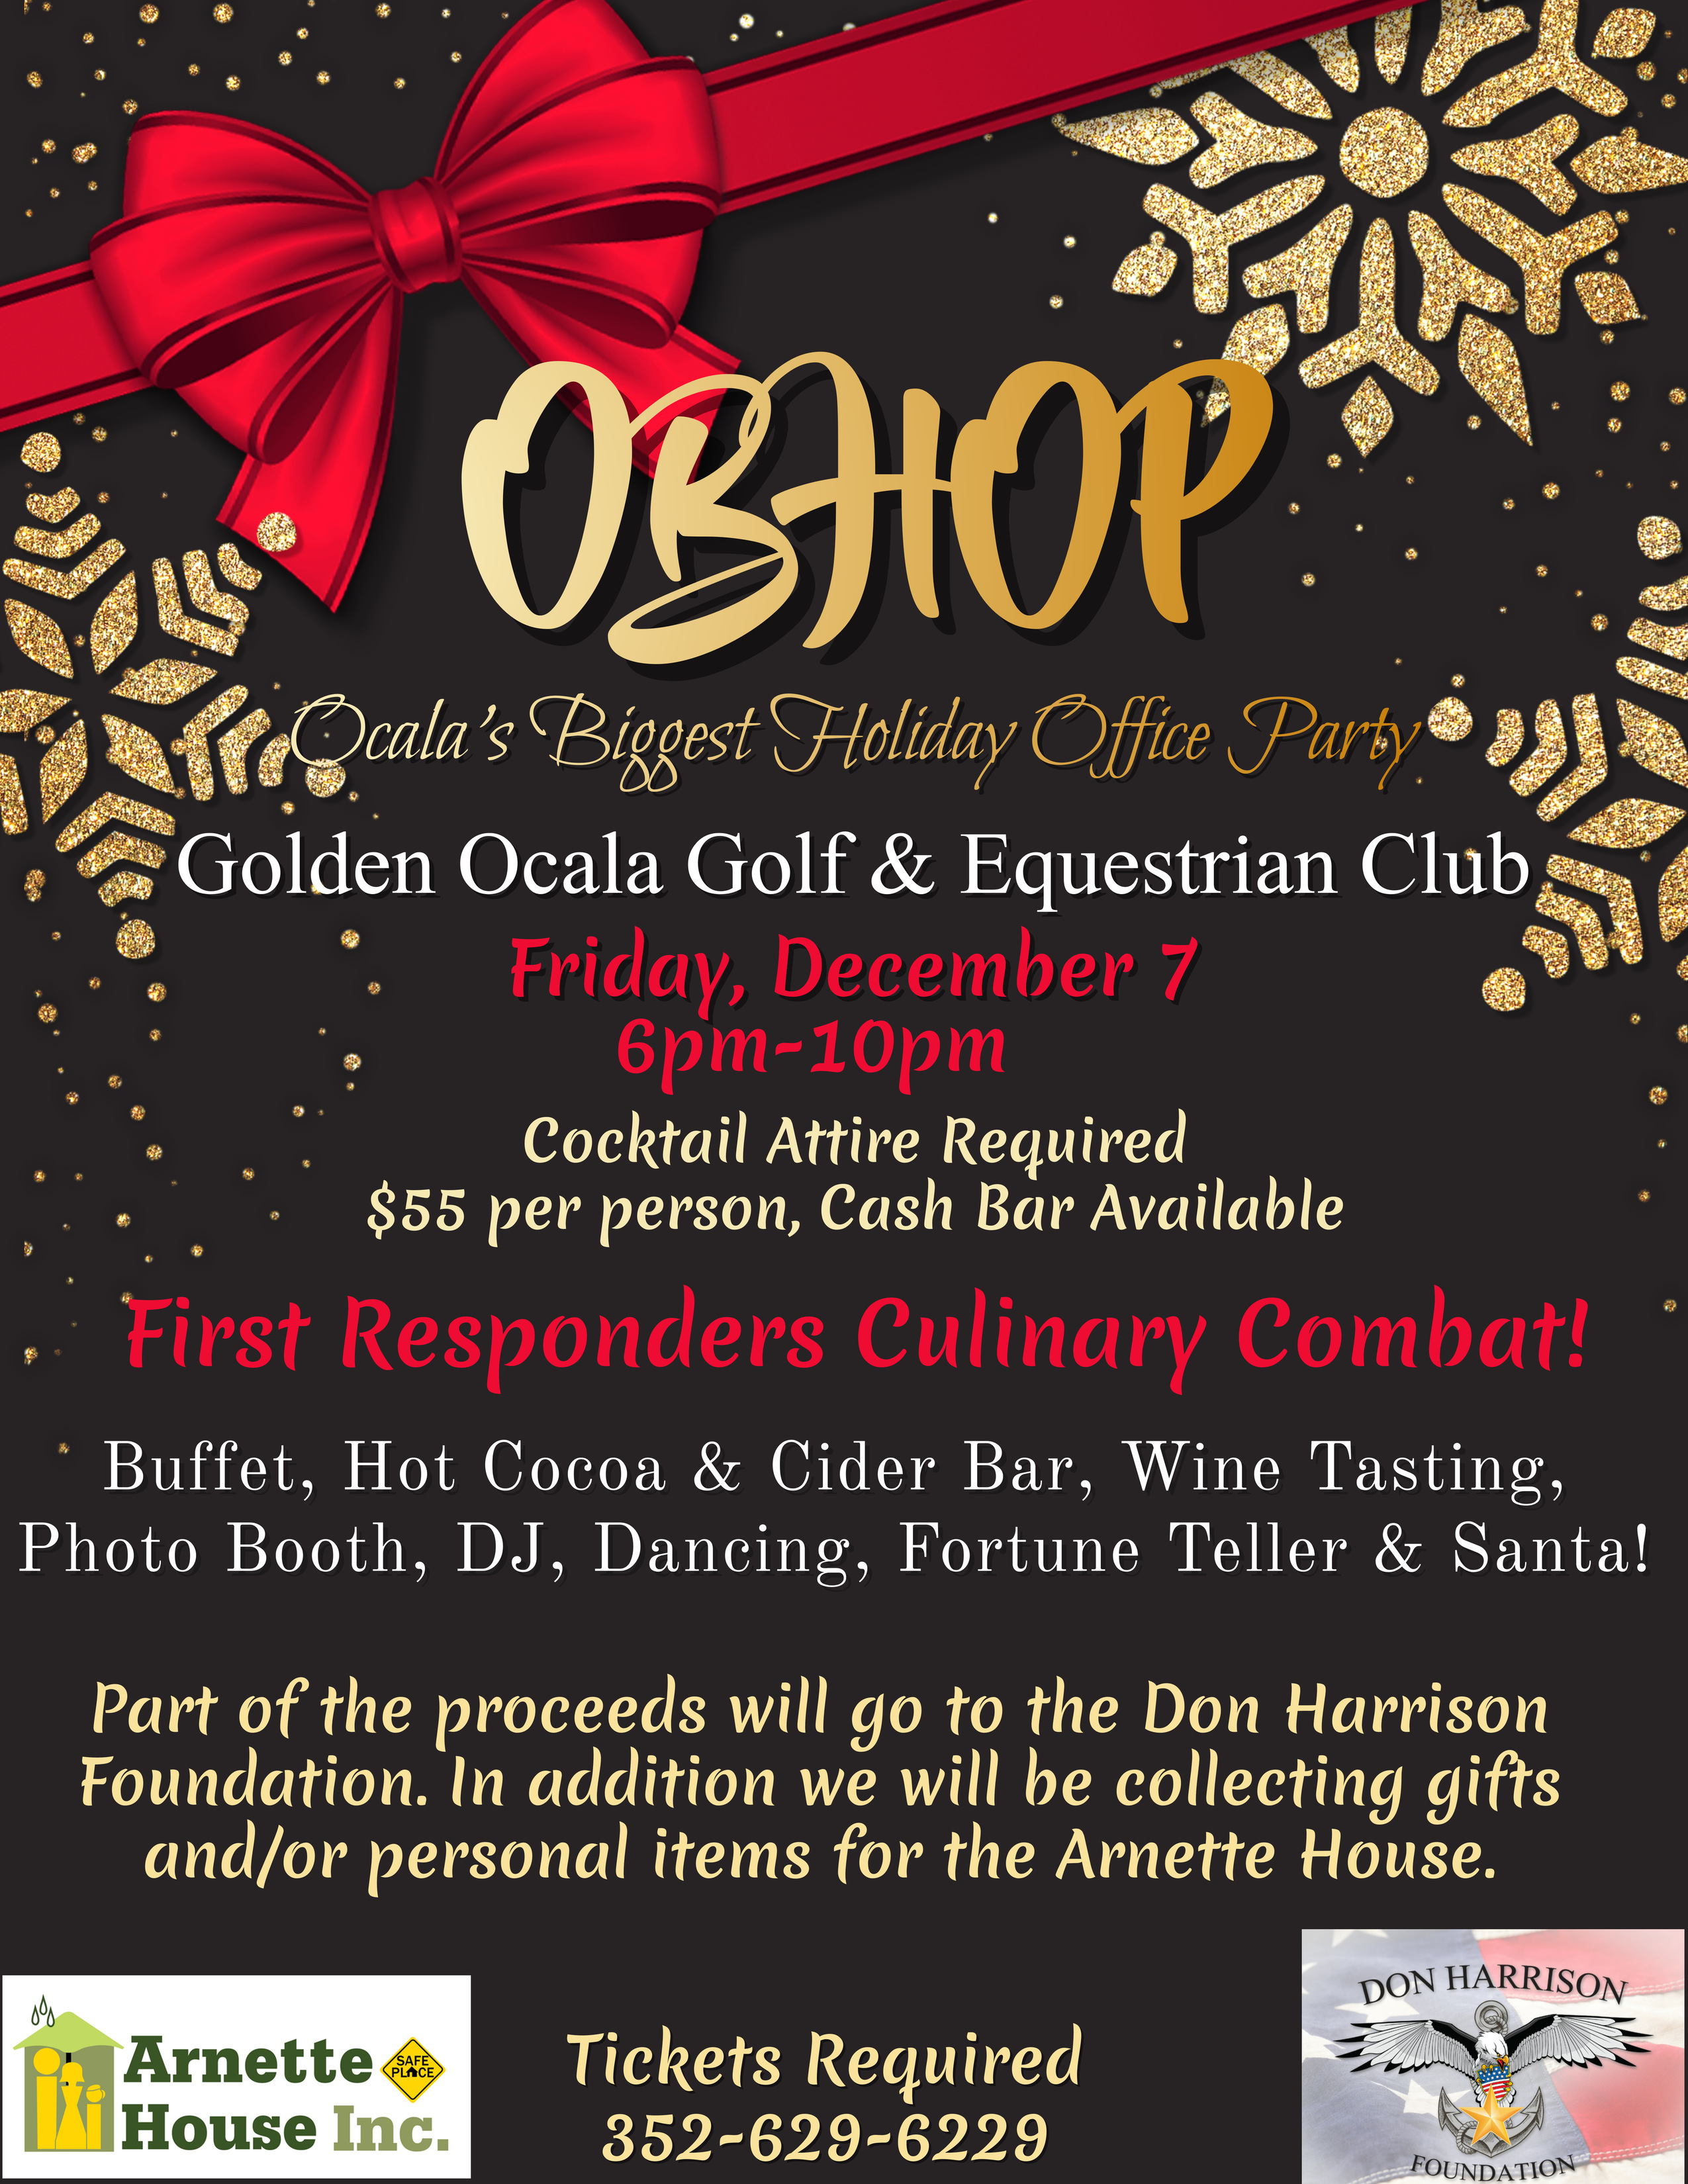 Copy of Christmas Party Flyer Template (1) - Golden Ocala